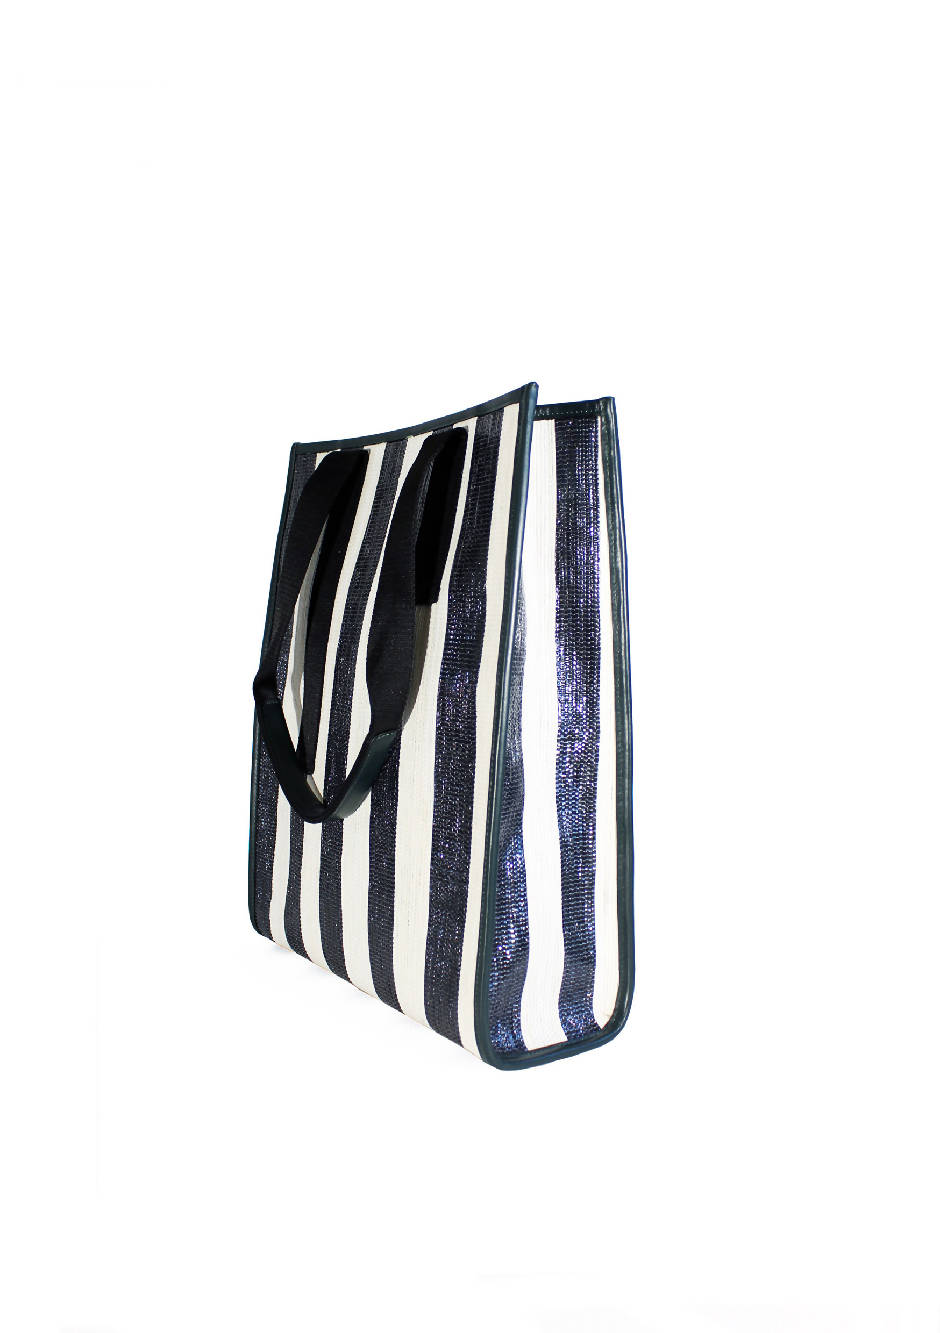 Striped Purse Handbag Black White Nightmare Stripes Christmas Birthday Gift  Idea Goth Cute Edgy Fashion Shoulder Bag Creepy Witchy Couture - Etsy